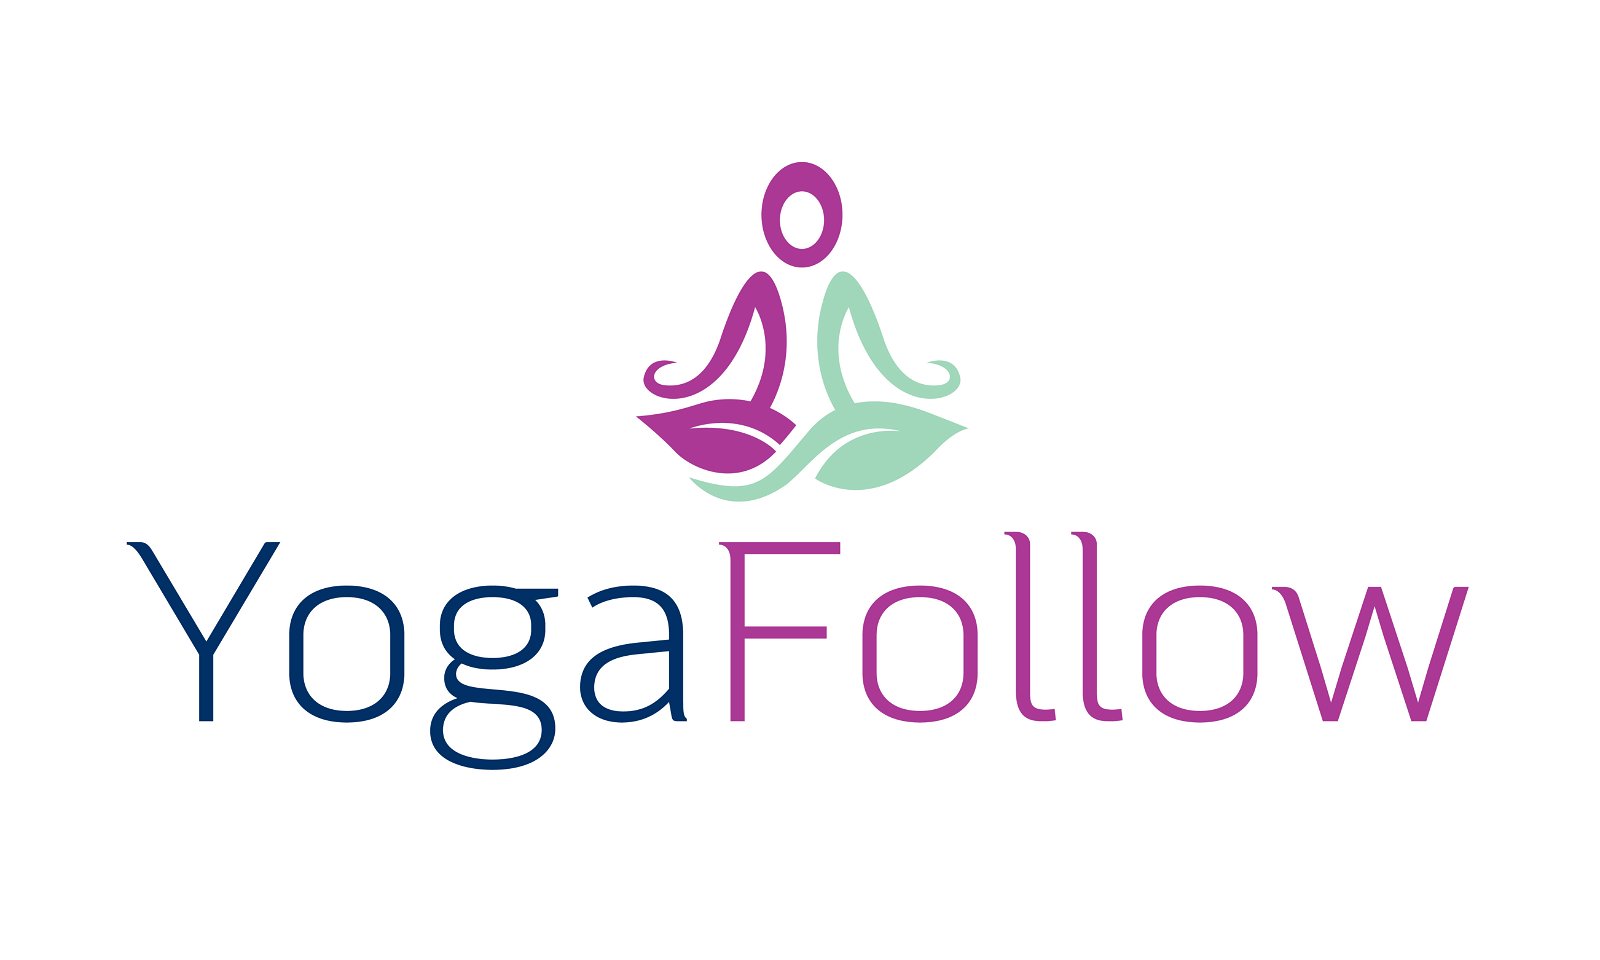 YogaFollow.com - Creative brandable domain for sale